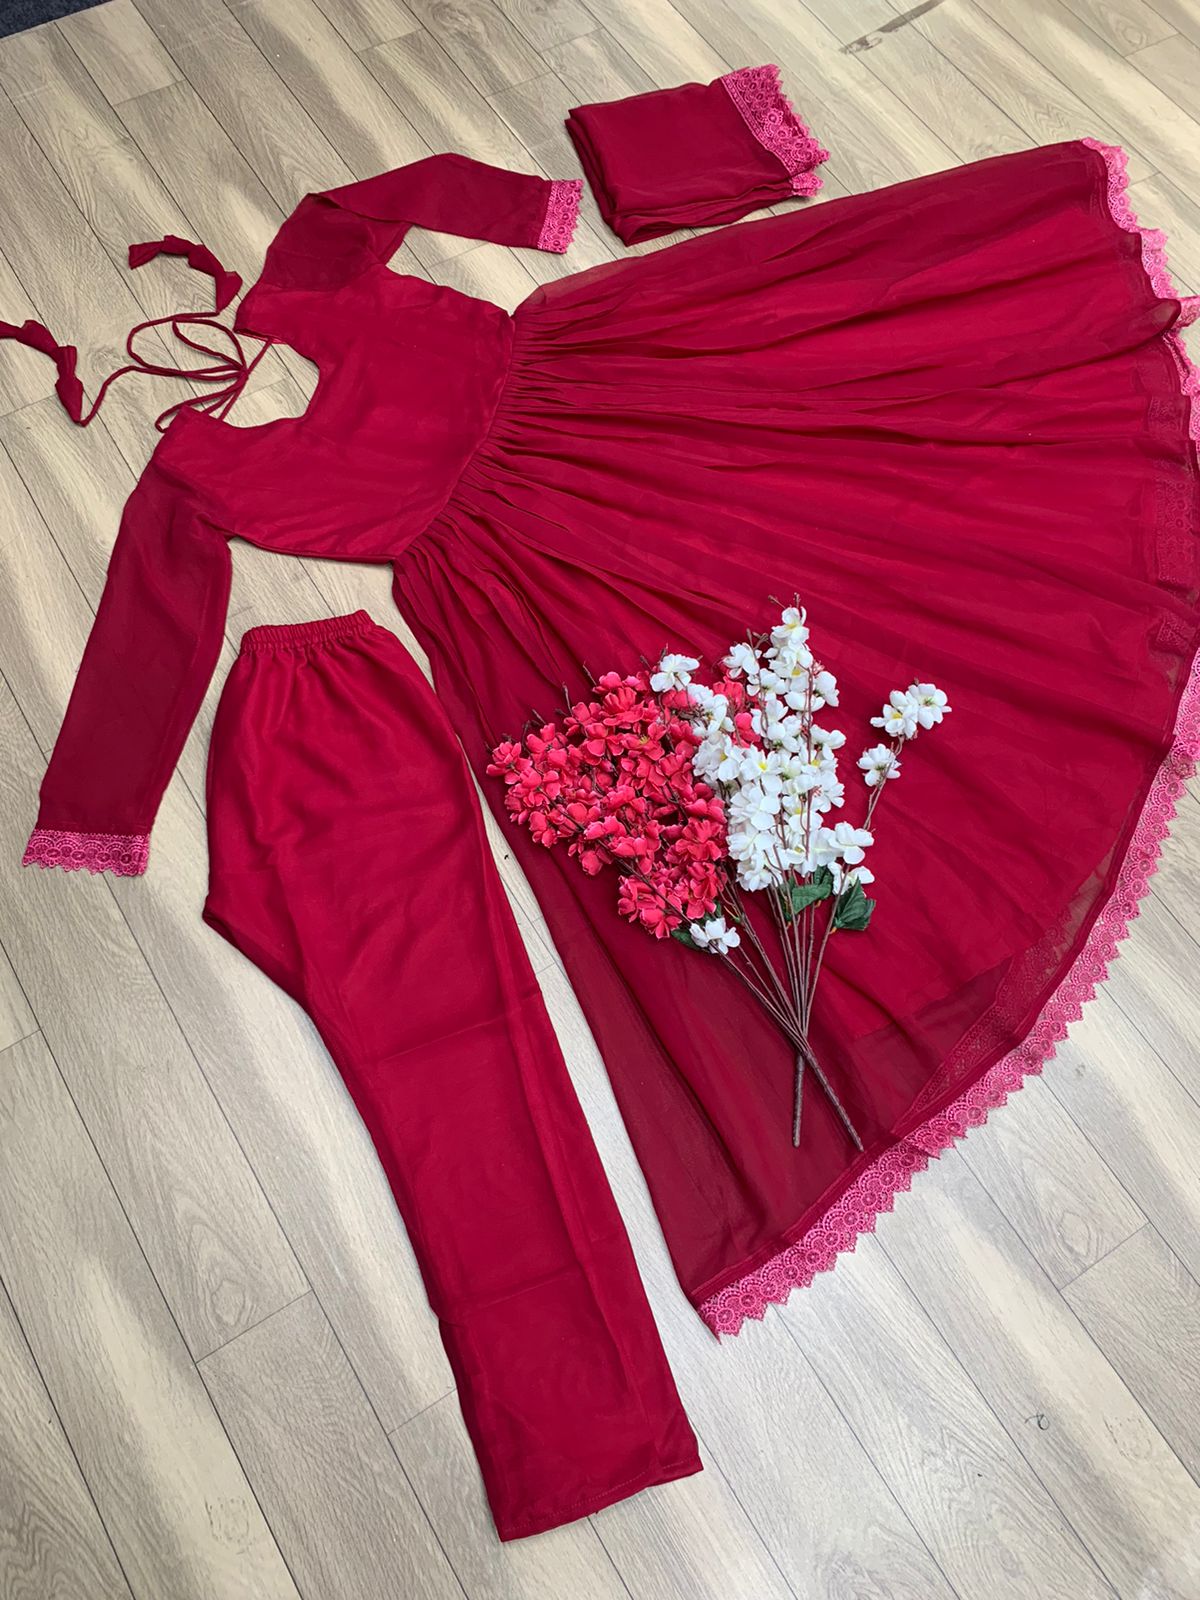 Party Wear Dark Pink Color Stunning Anarkali Gown